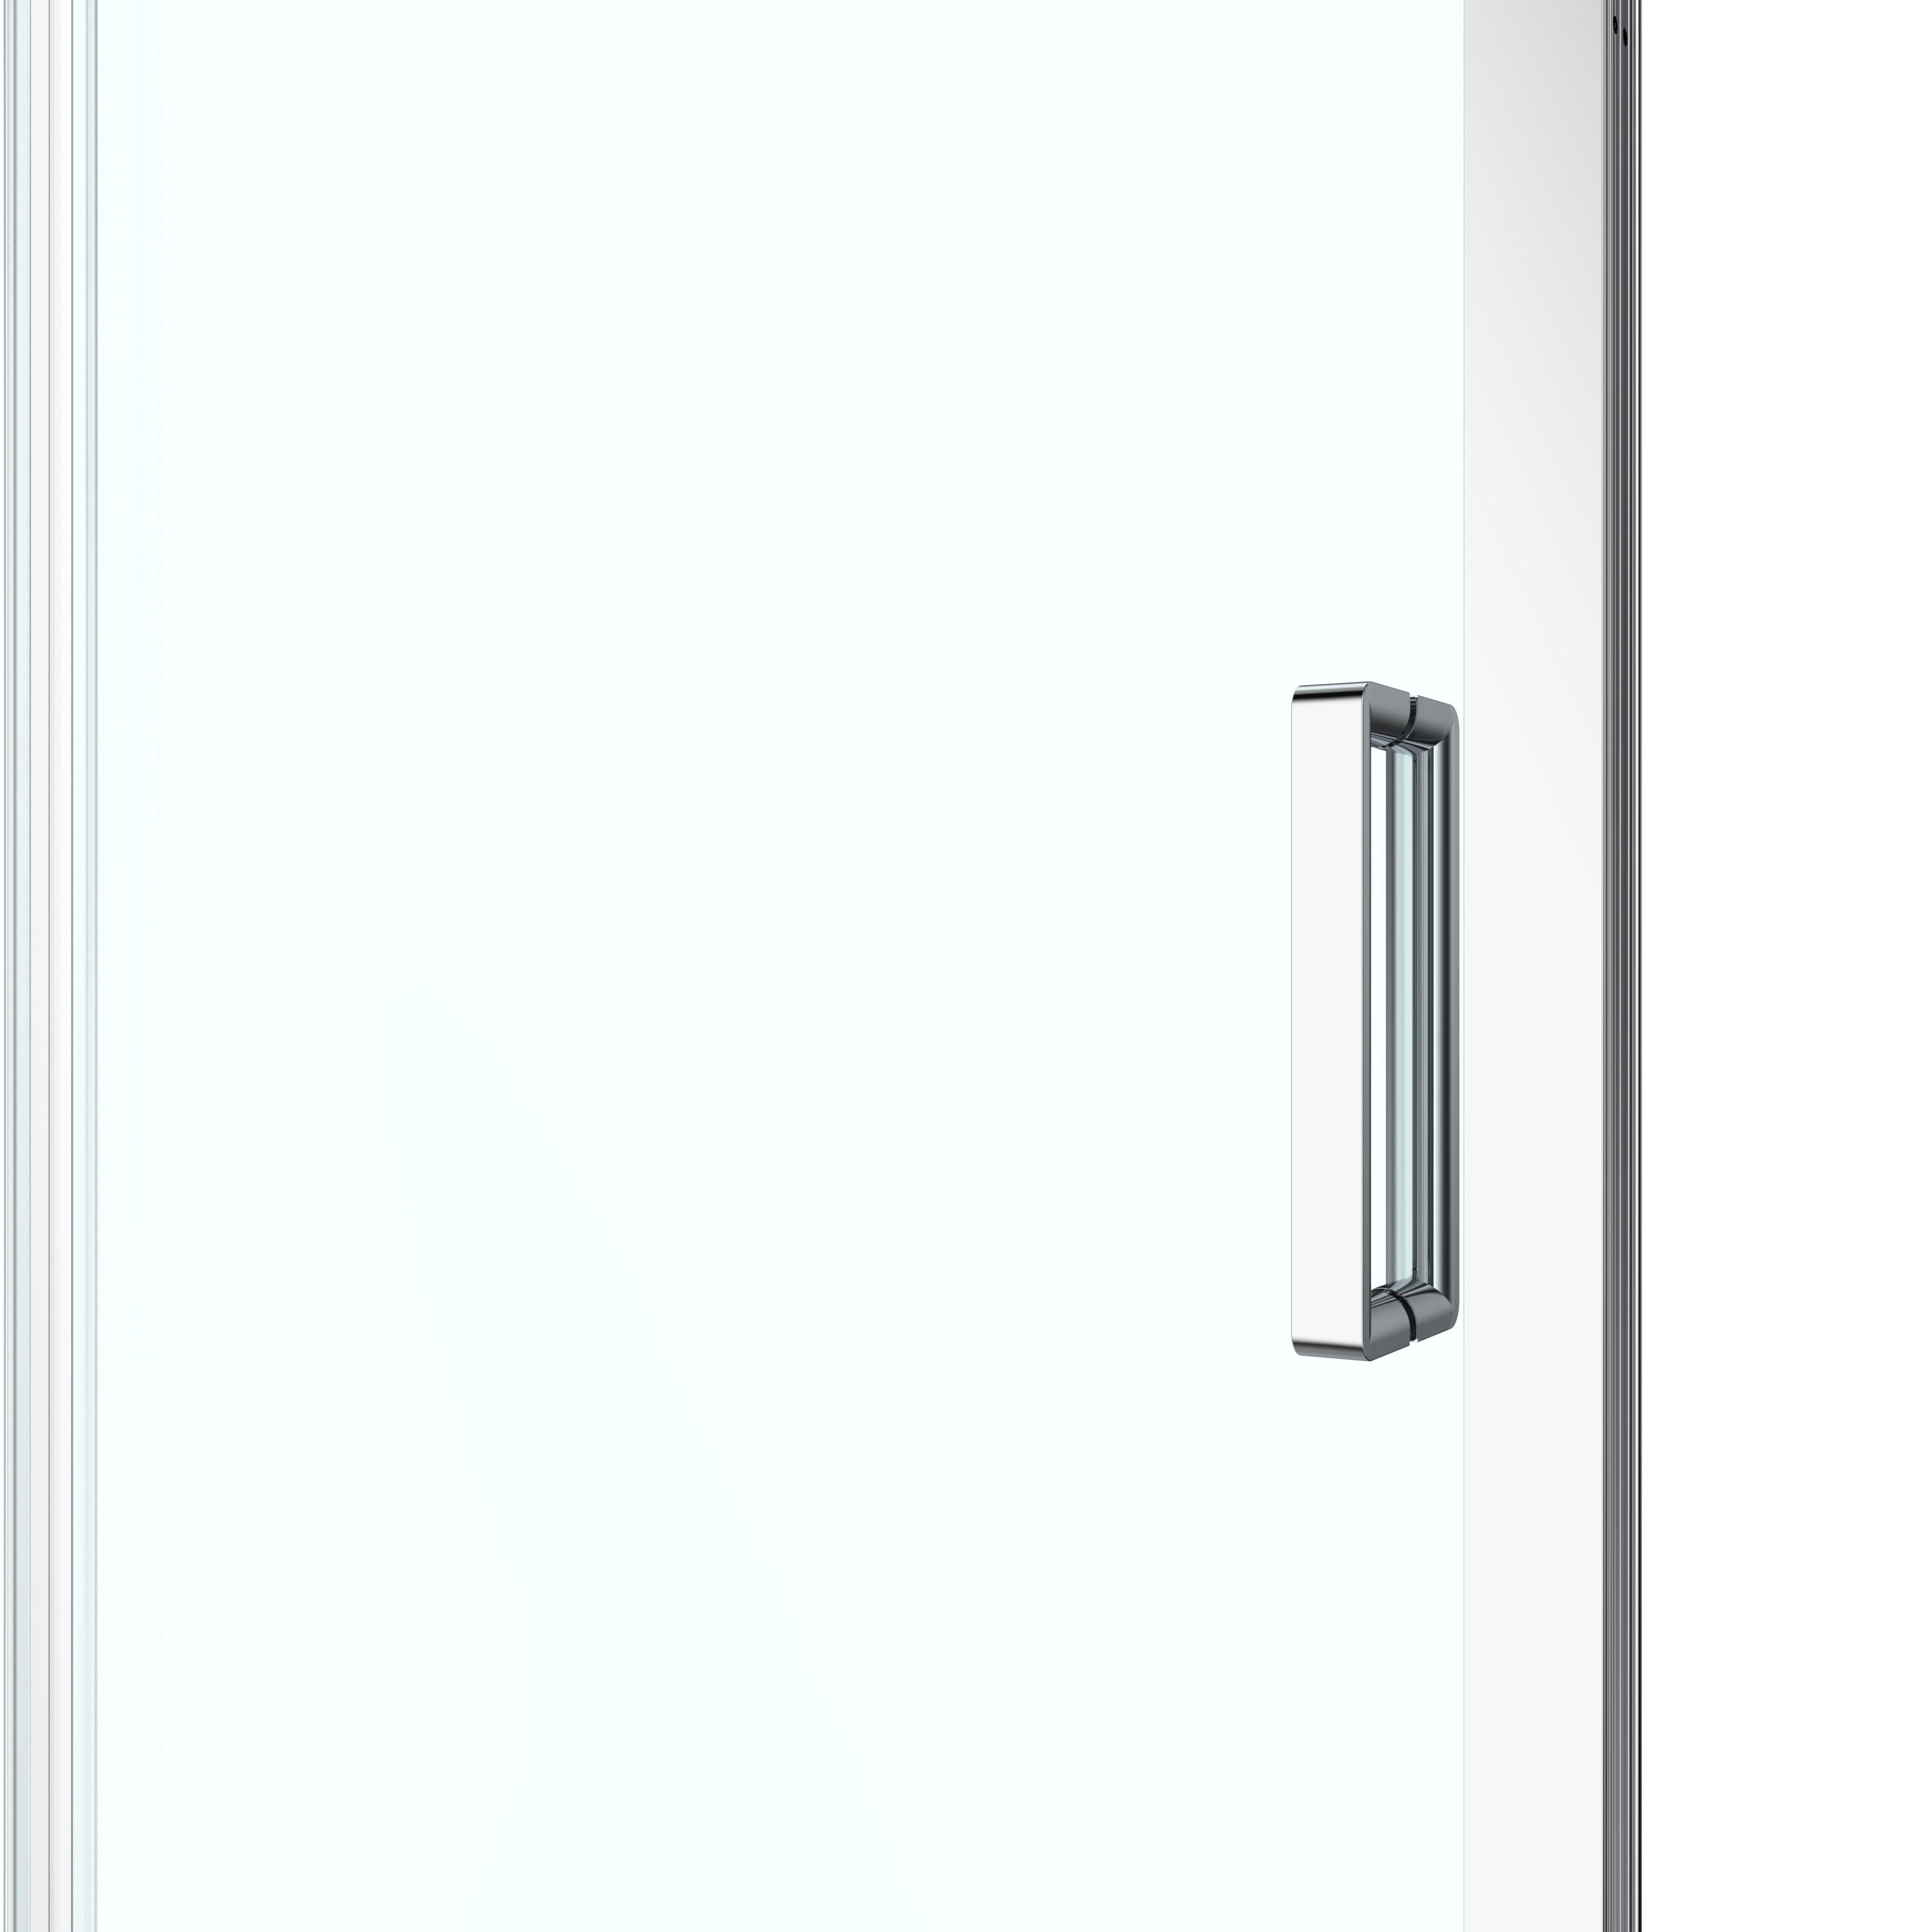 GoodHome Ledava Minimal frame Chrome effect Clear glass Sliding Shower Door (H)195cm (W)100cm